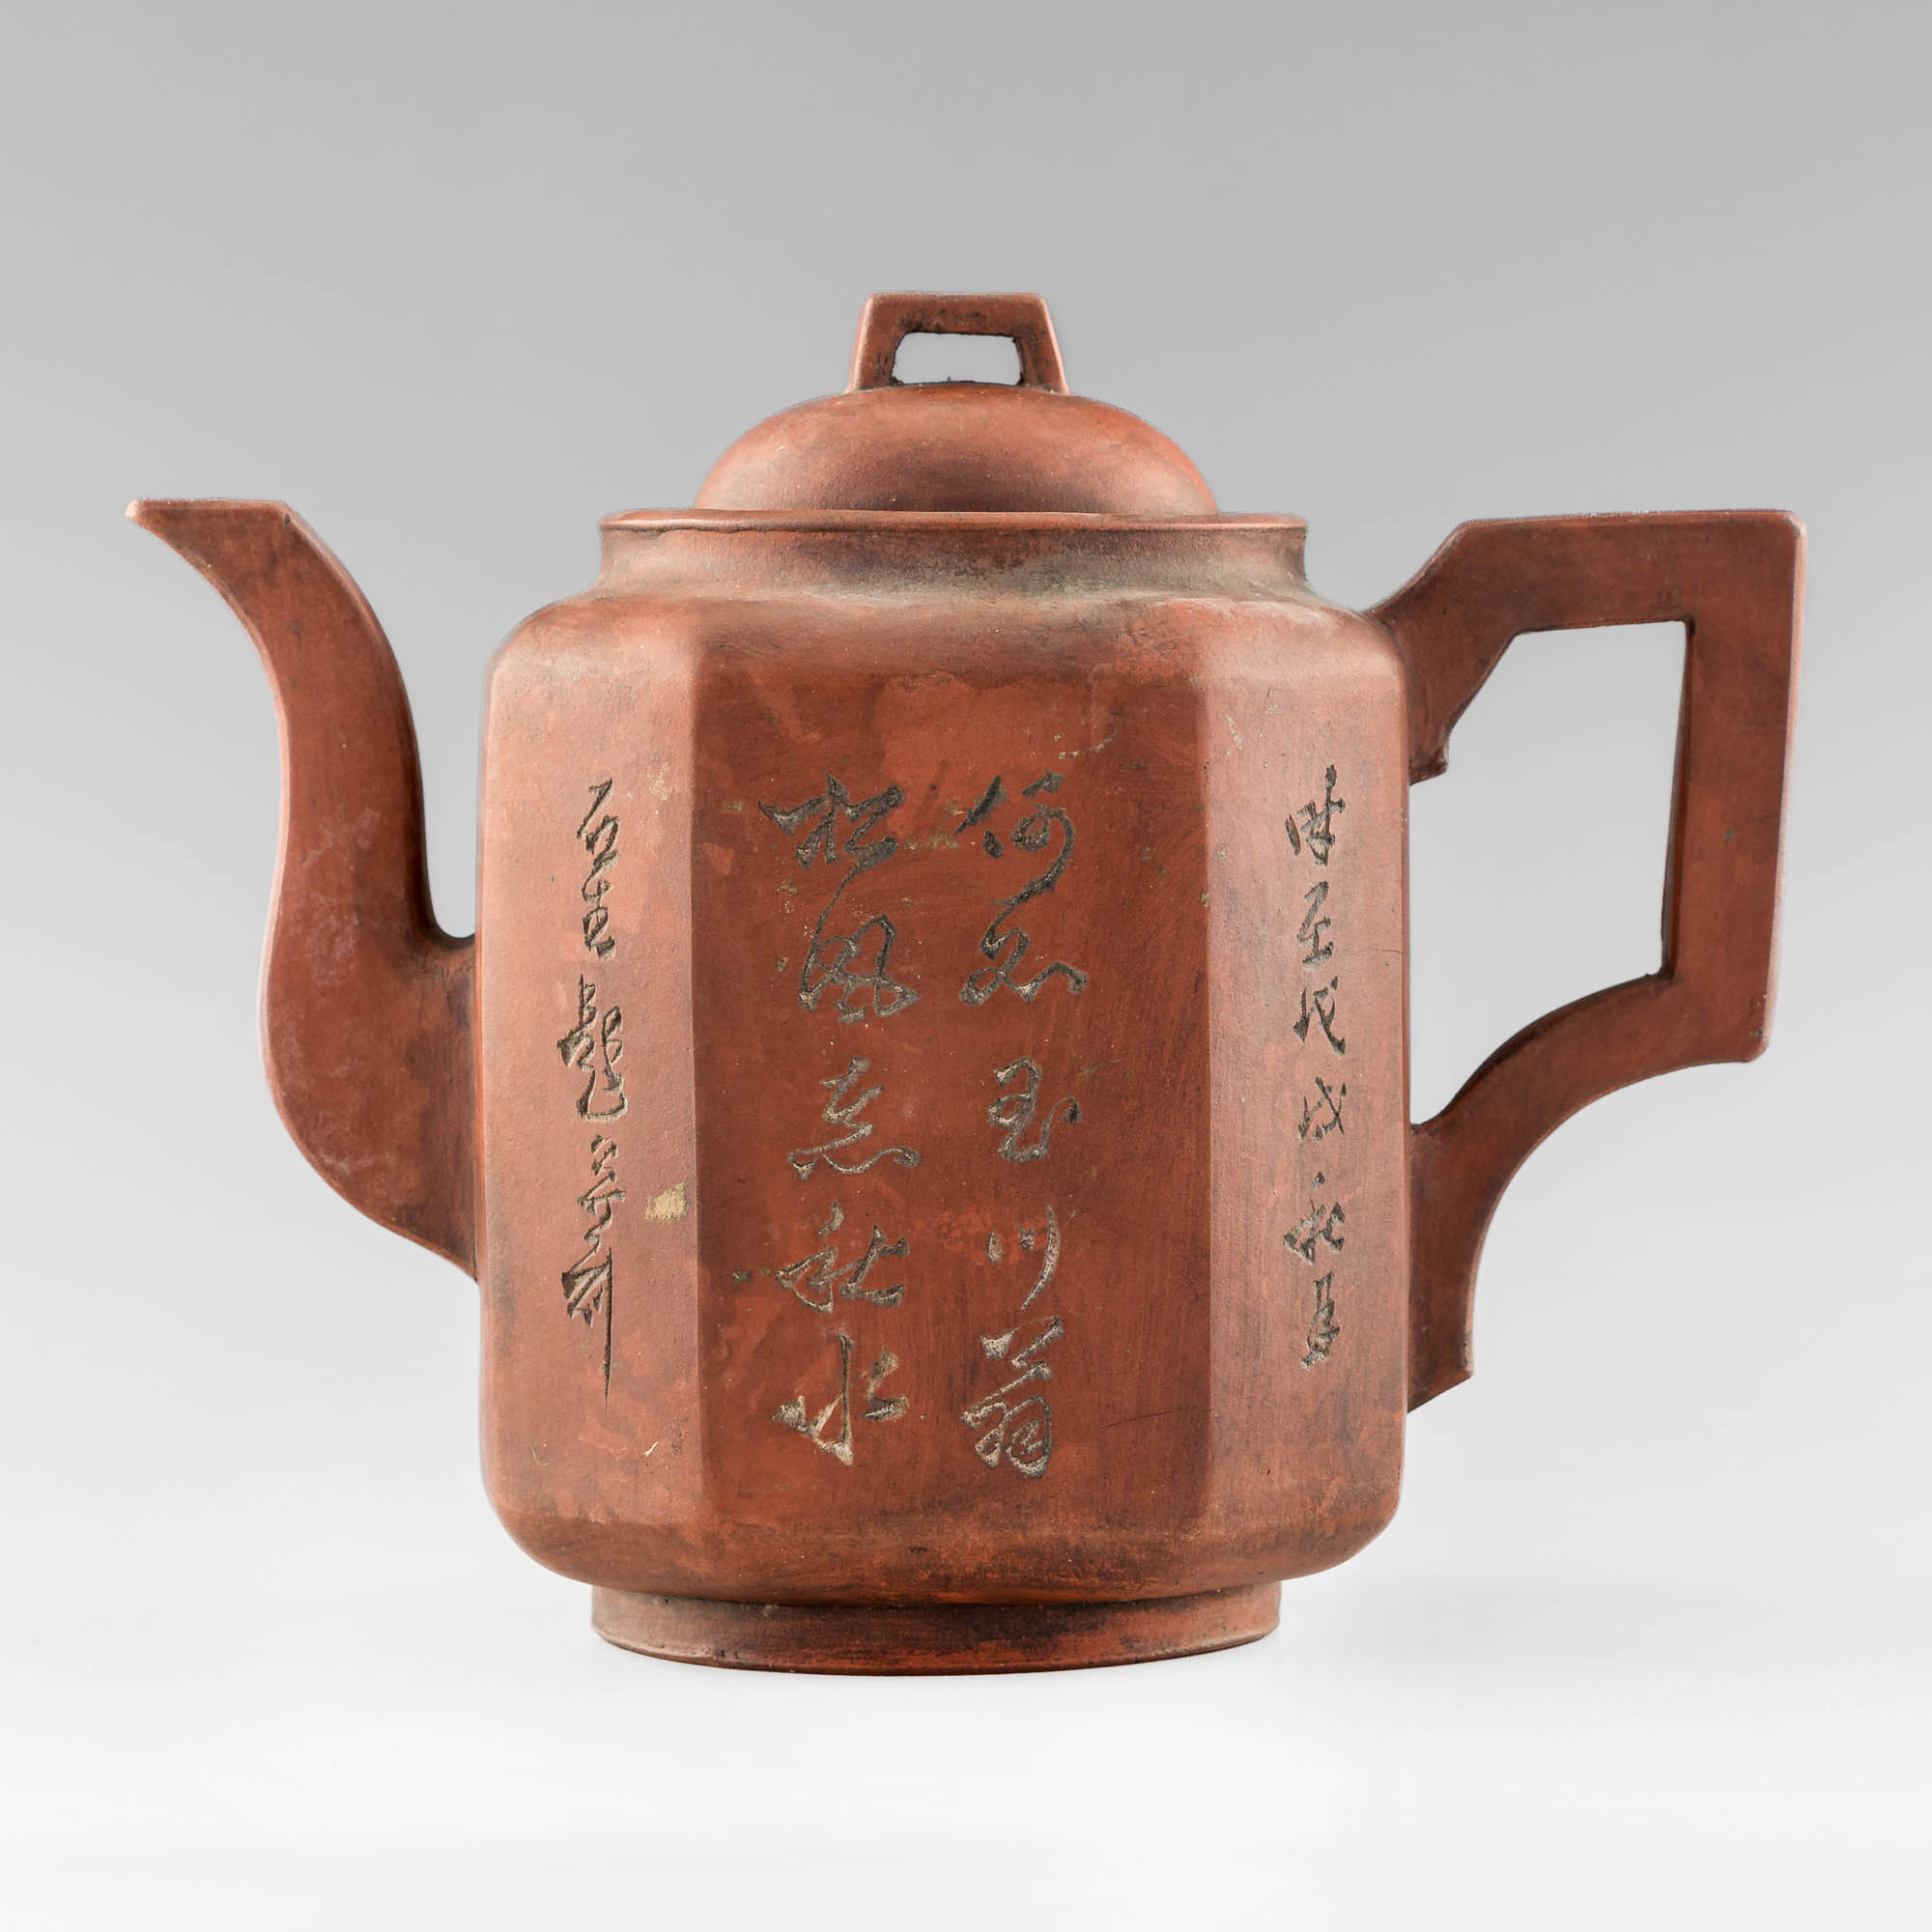 民國紫砂詩文執壺A Chinese Yixing teapot with poem, Republic period 